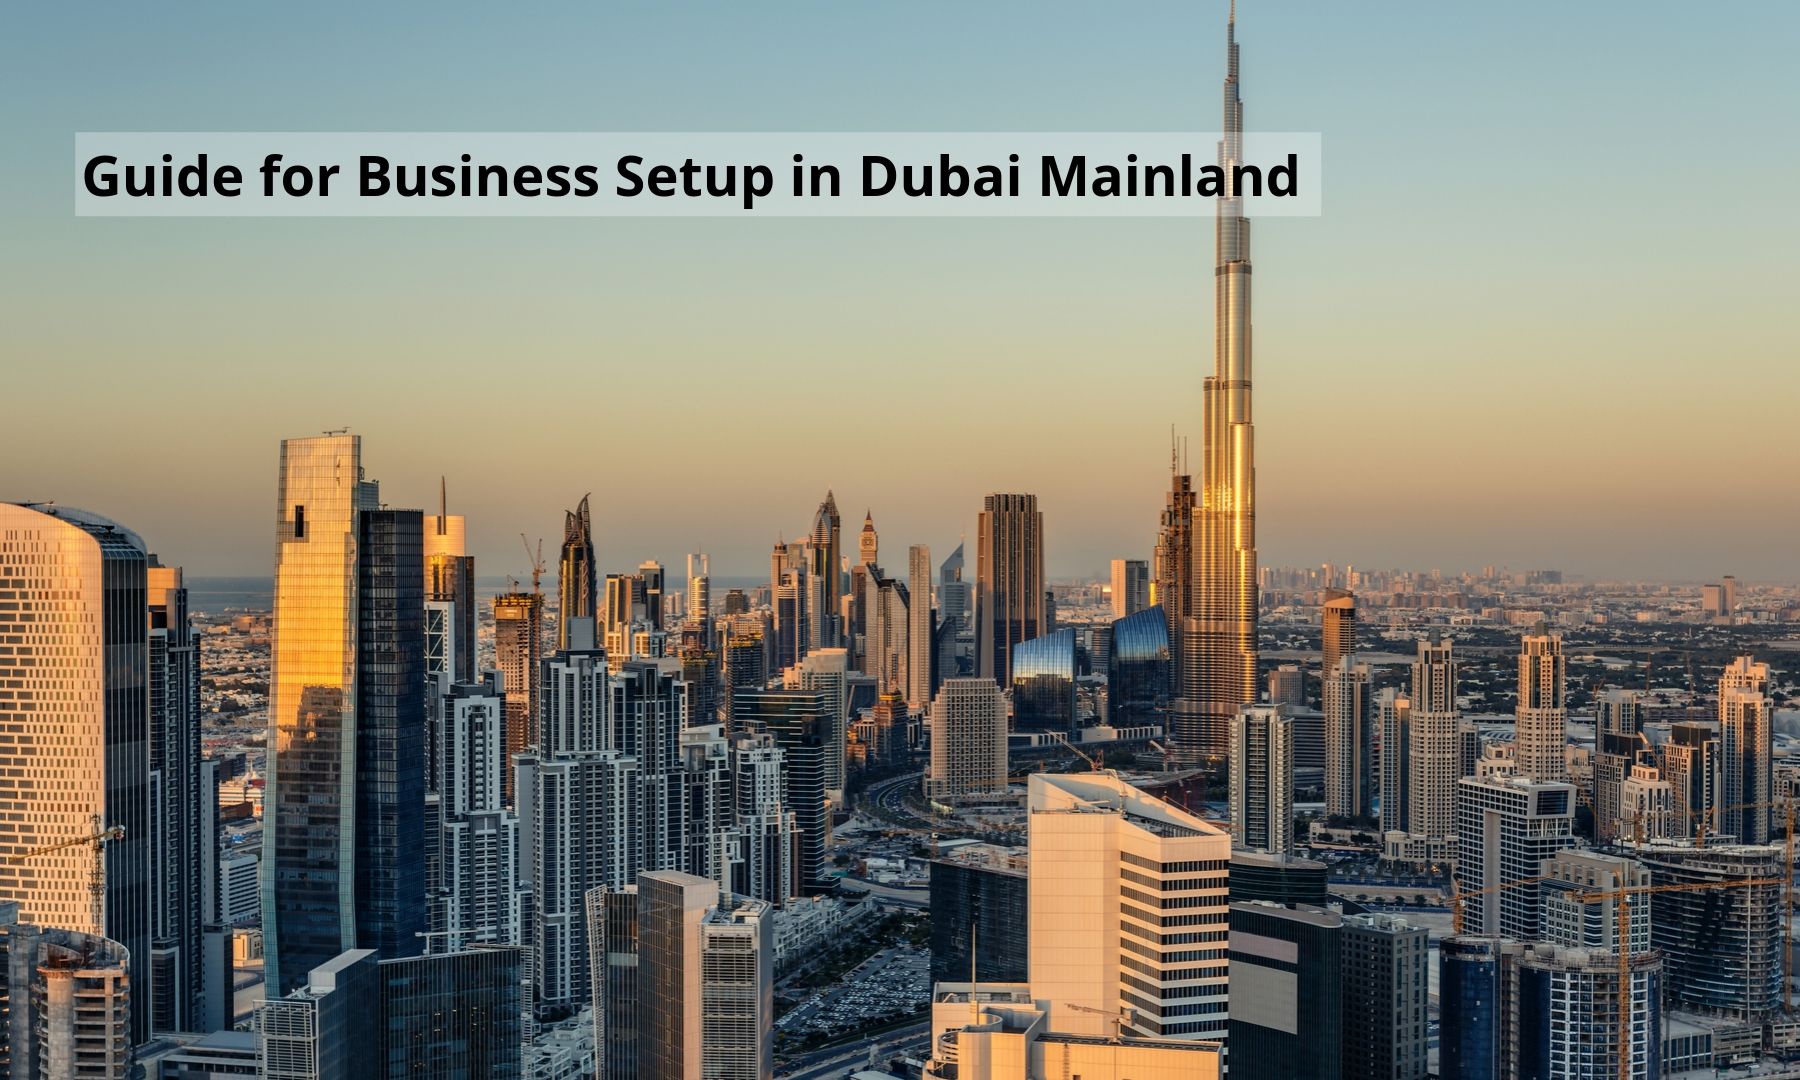 Hot to start business in Dubai mainland